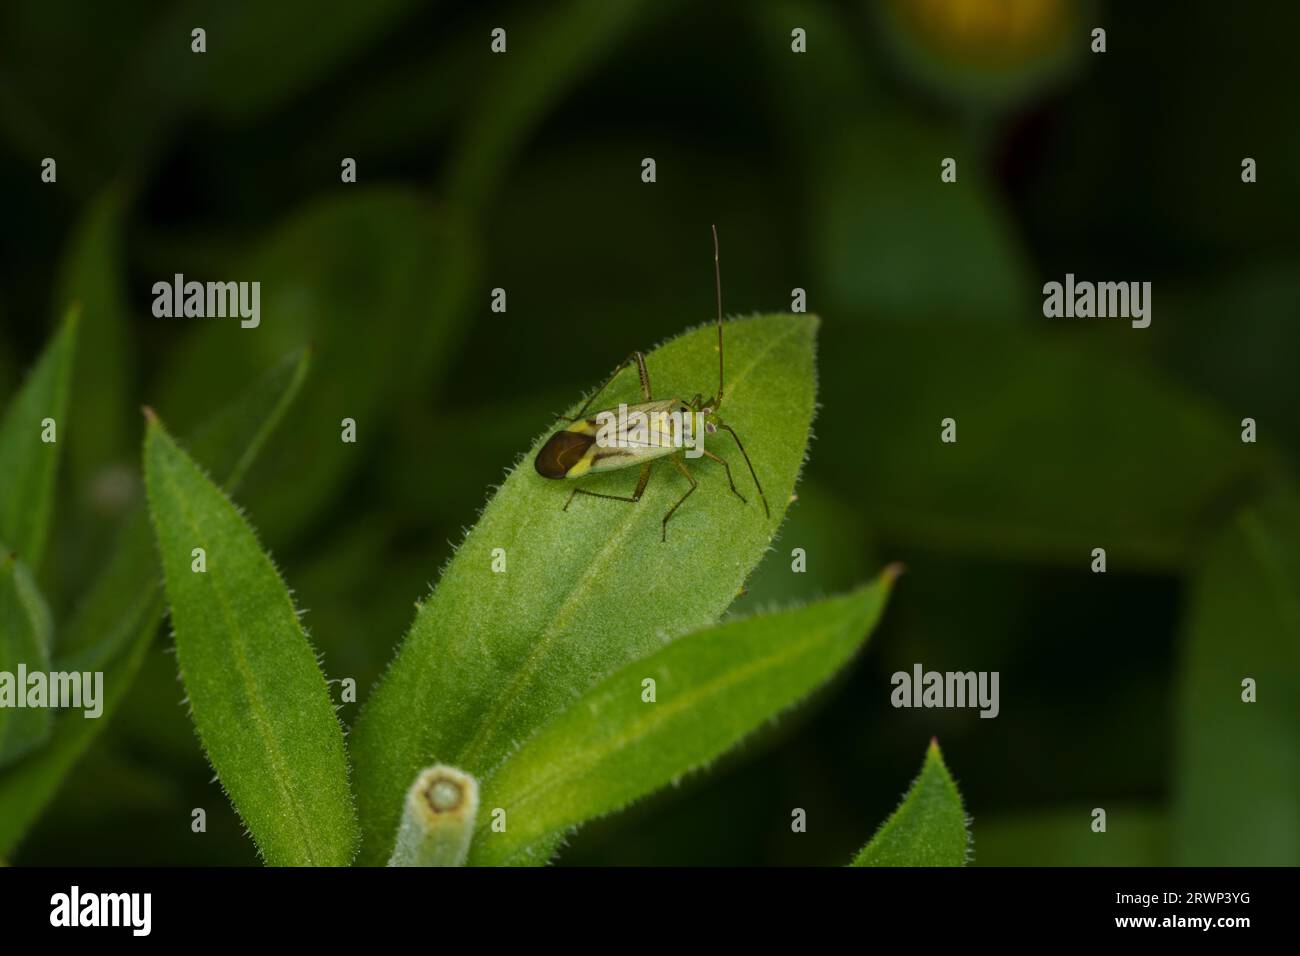 Adelphocoris quadripunctatus Family Miridae Genus Adelphocoris Grass aphid plant bug wild nature insect wallpaper, photography, picture Stock Photo